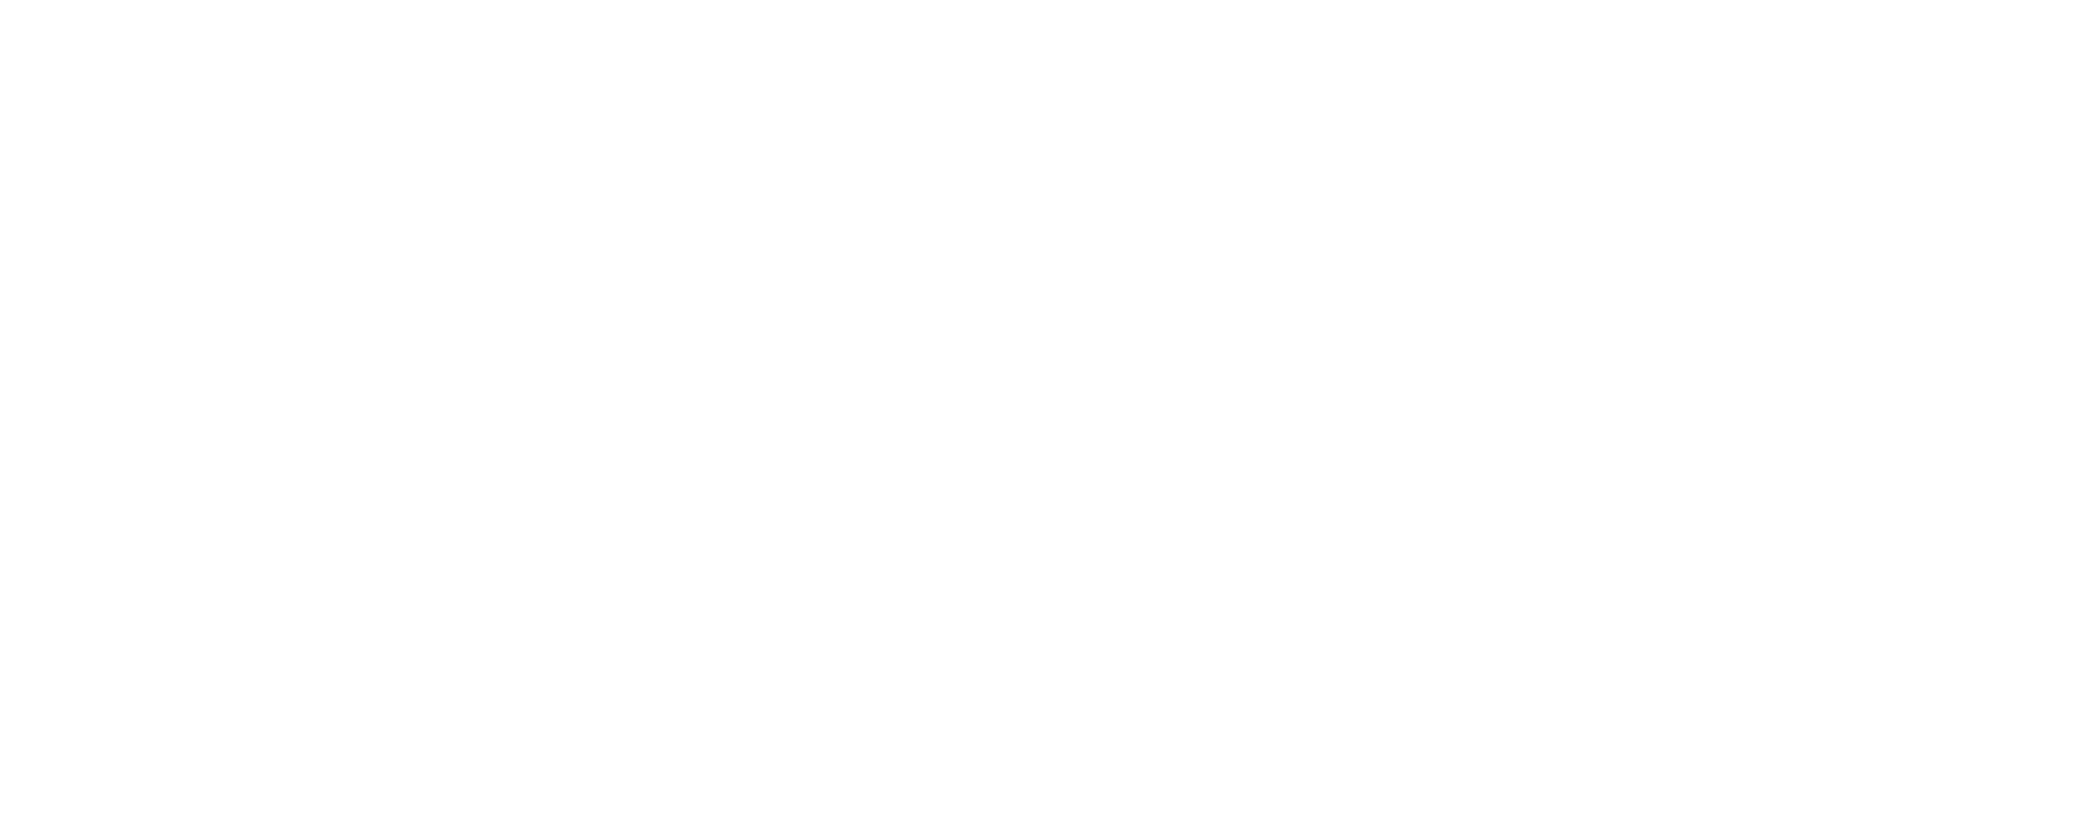 Phorest